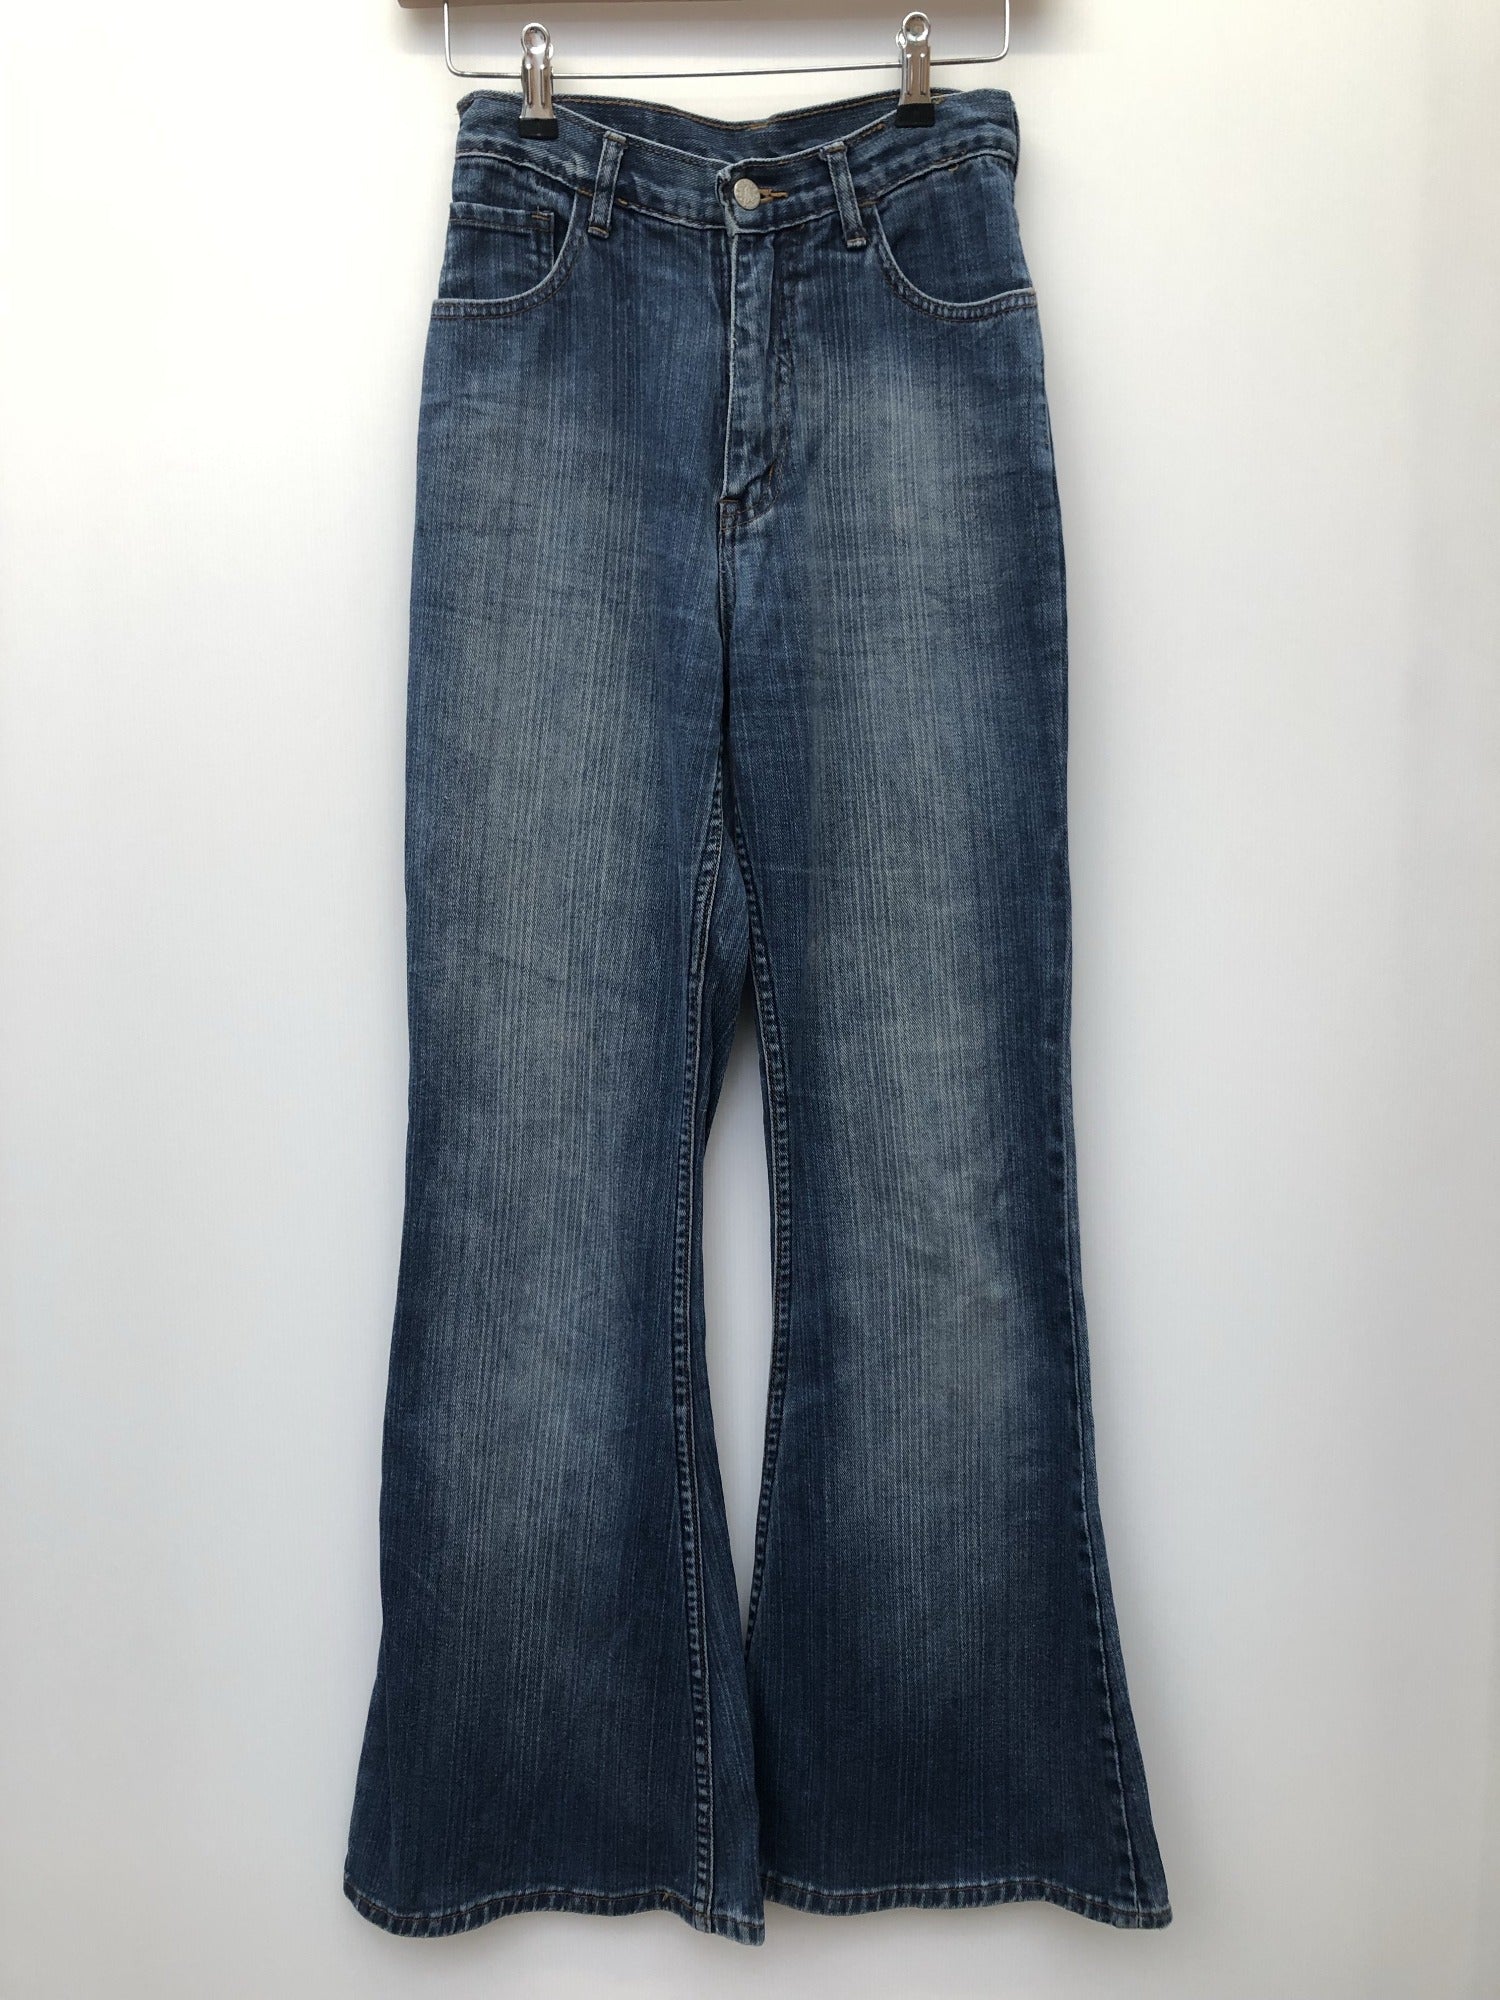 womens  W24  vintage  Urban Village Vintage  urban village  straight cut  retro  red tab  pockets  L32  jeans  jean  high waisted  flares  denim  Cotton  blue  70s  70  6  1970s